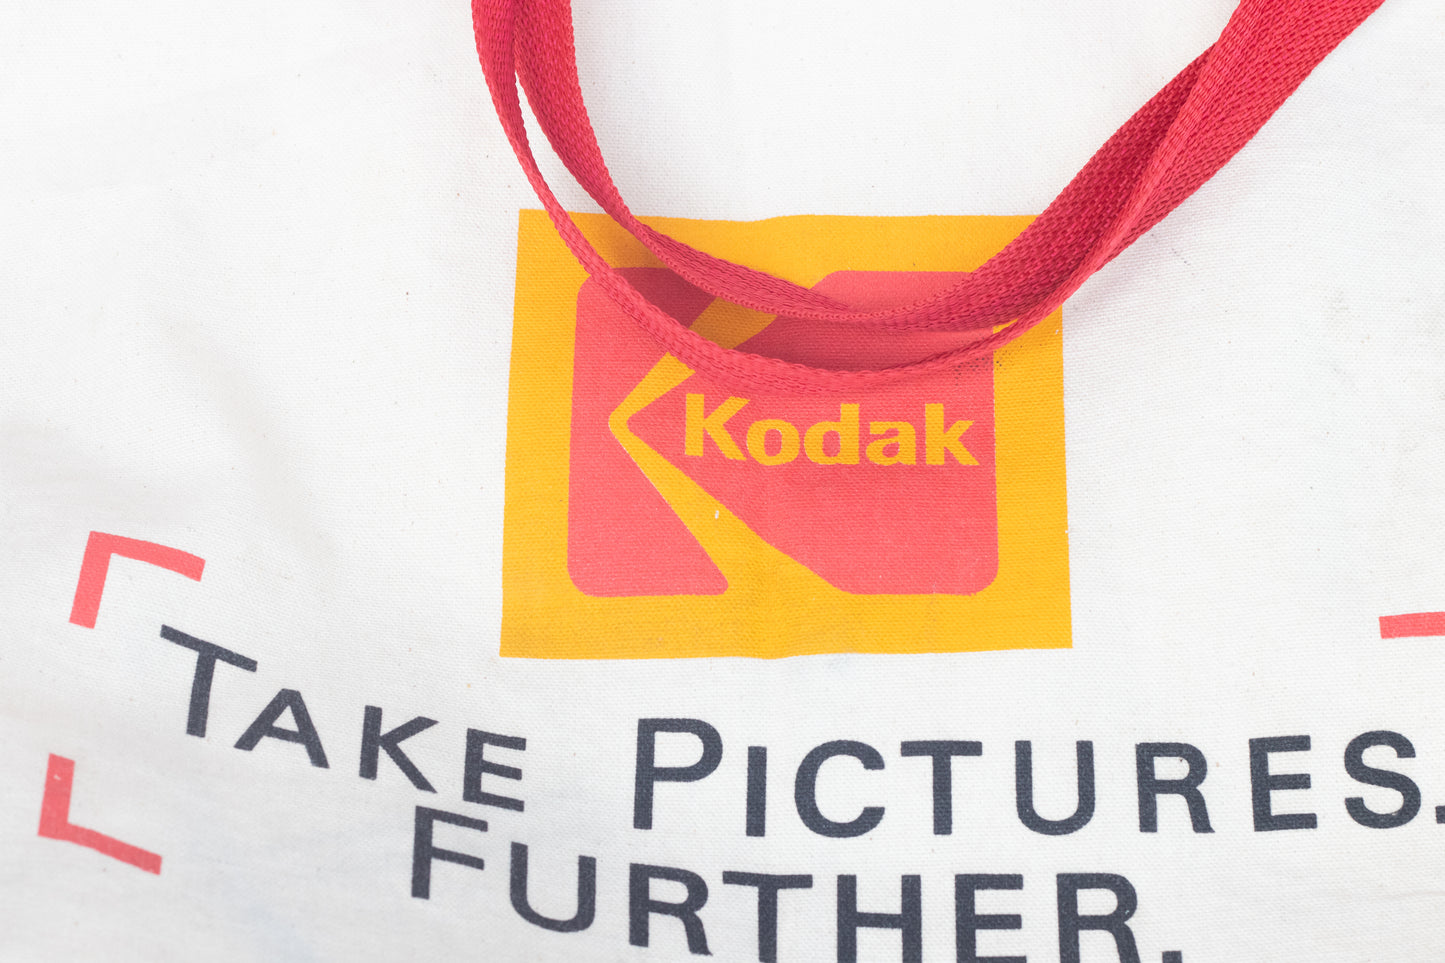 Vintage Double Sided Kodak Large Tote Bag | Printed Red, Yellow, Kodak bag